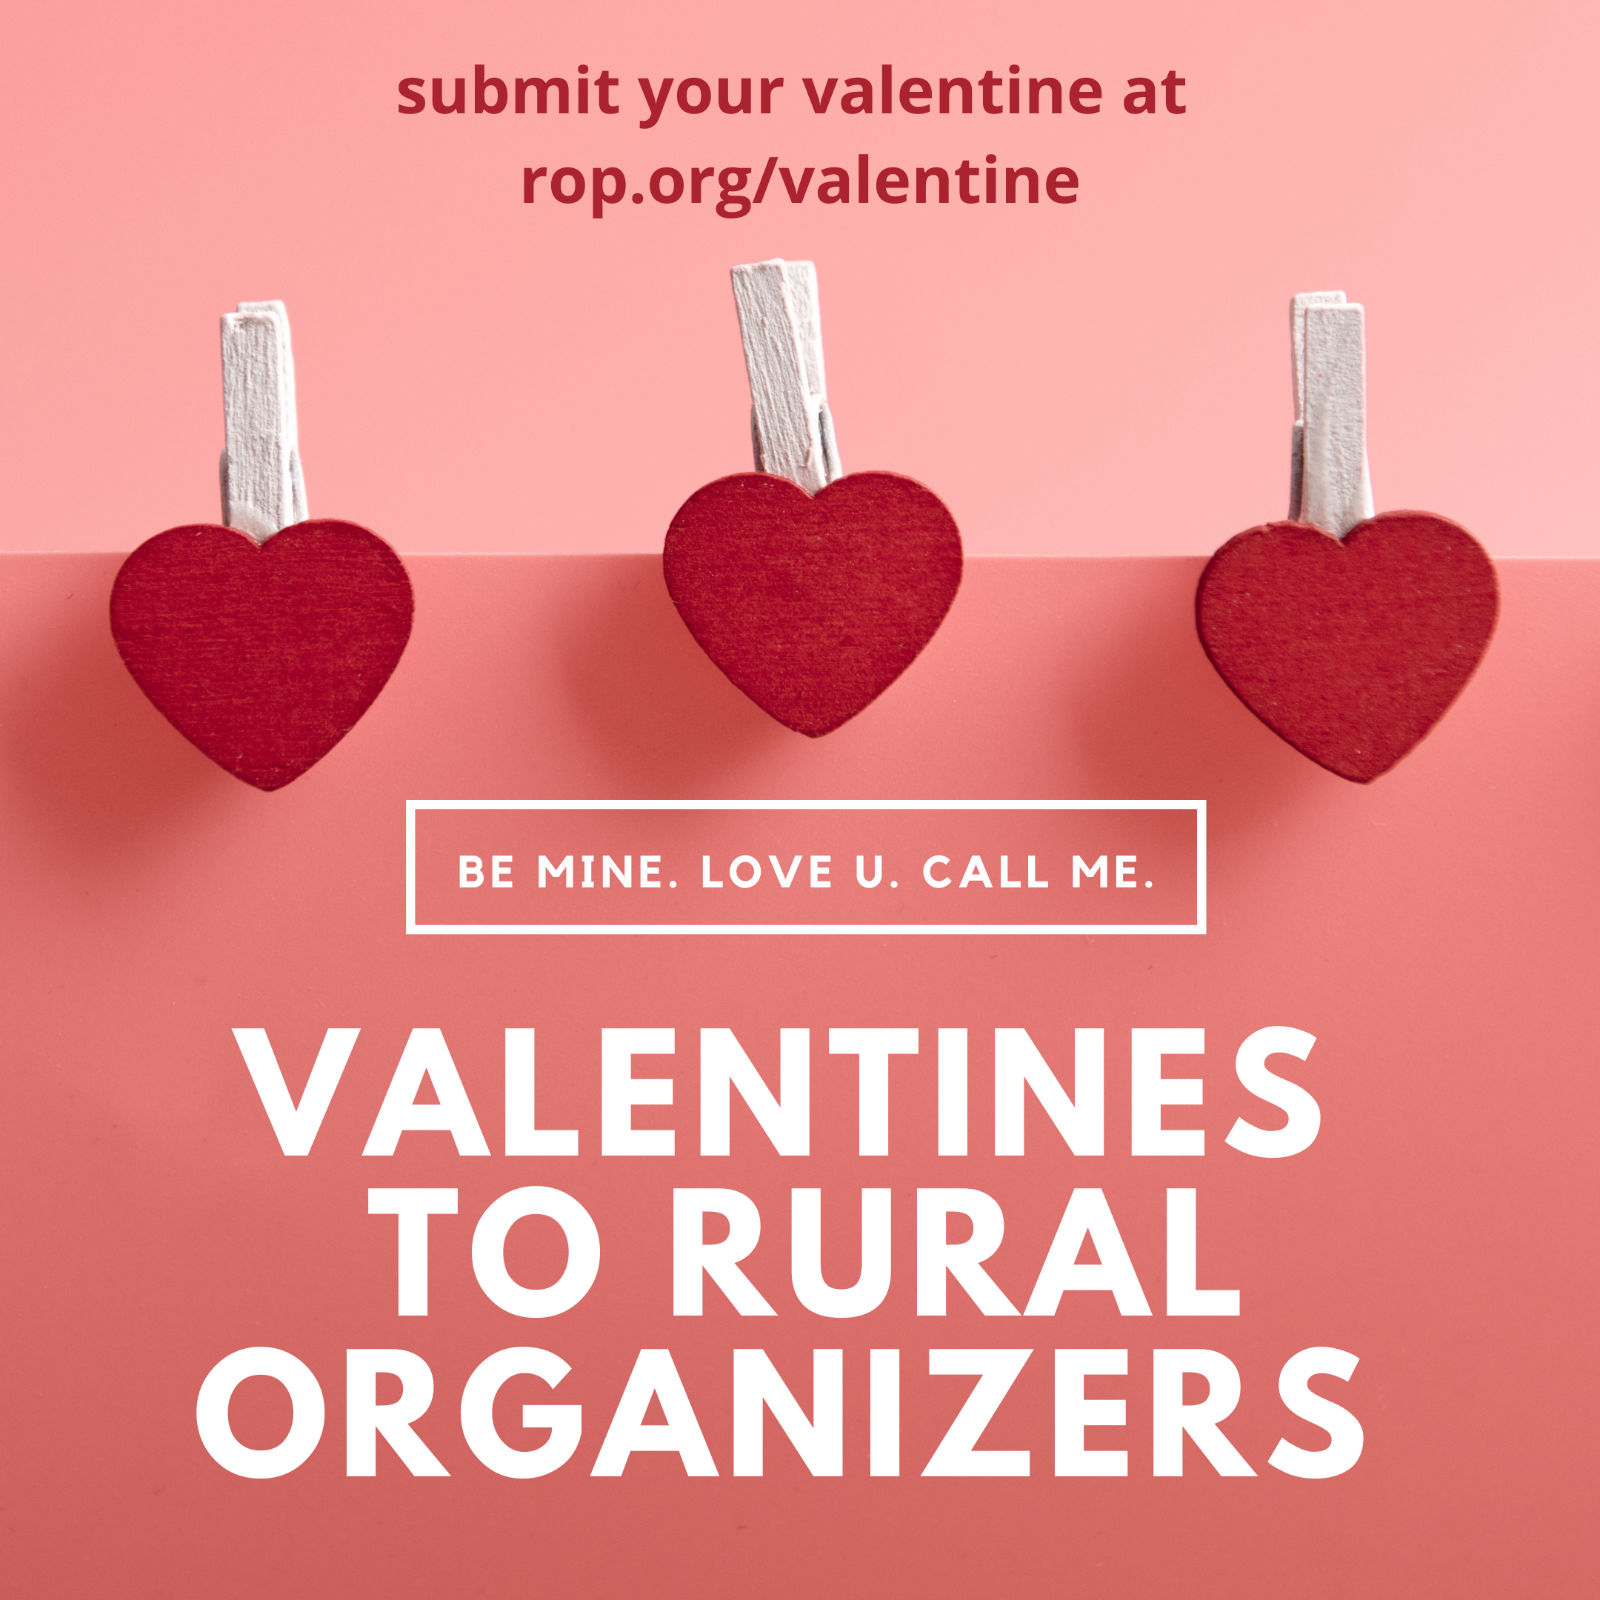 rop.org/valentine에서 발렌타인 데이를 제출하세요.